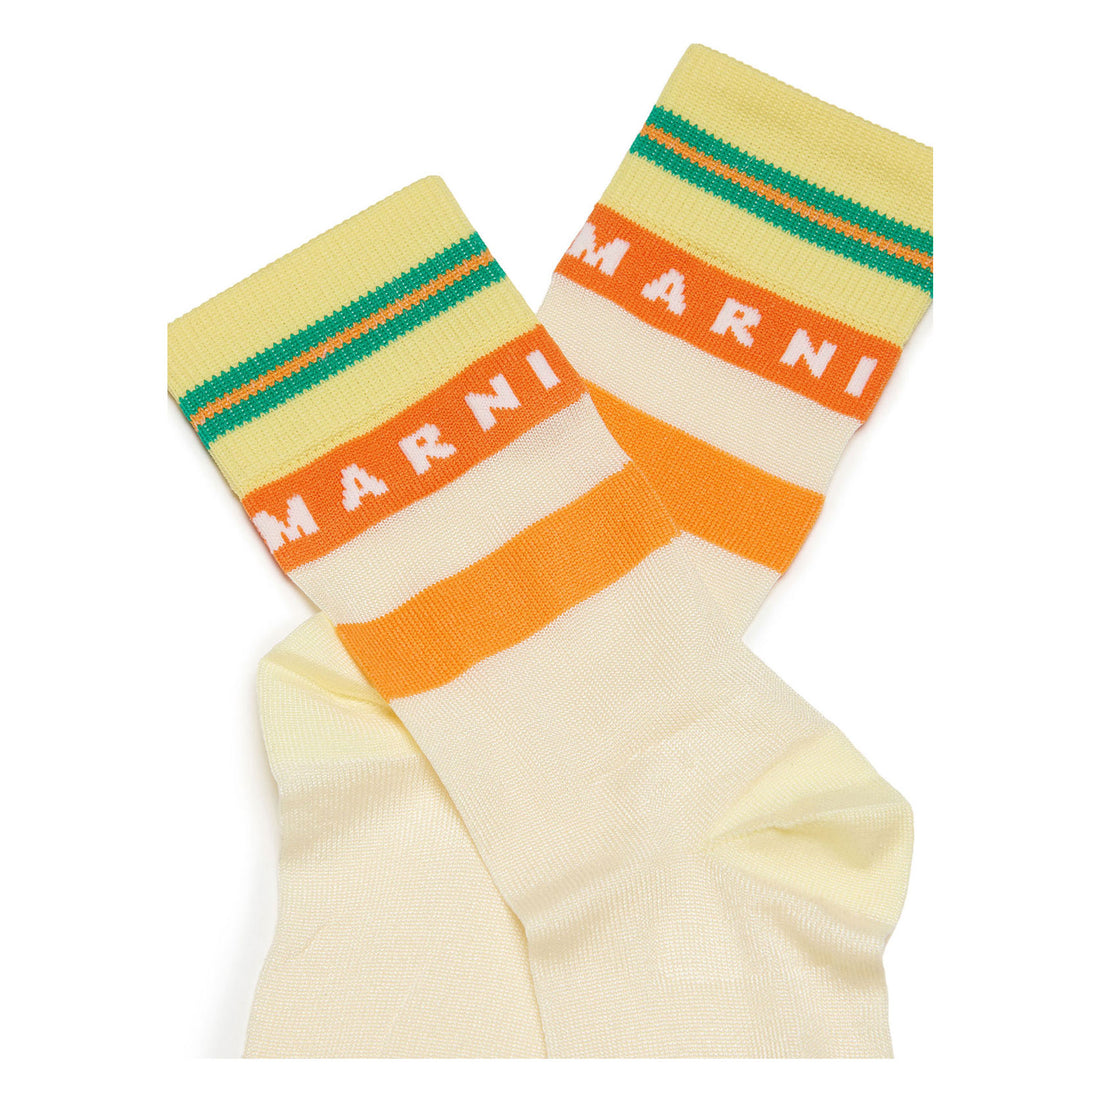 Marni Off White Striped Socks